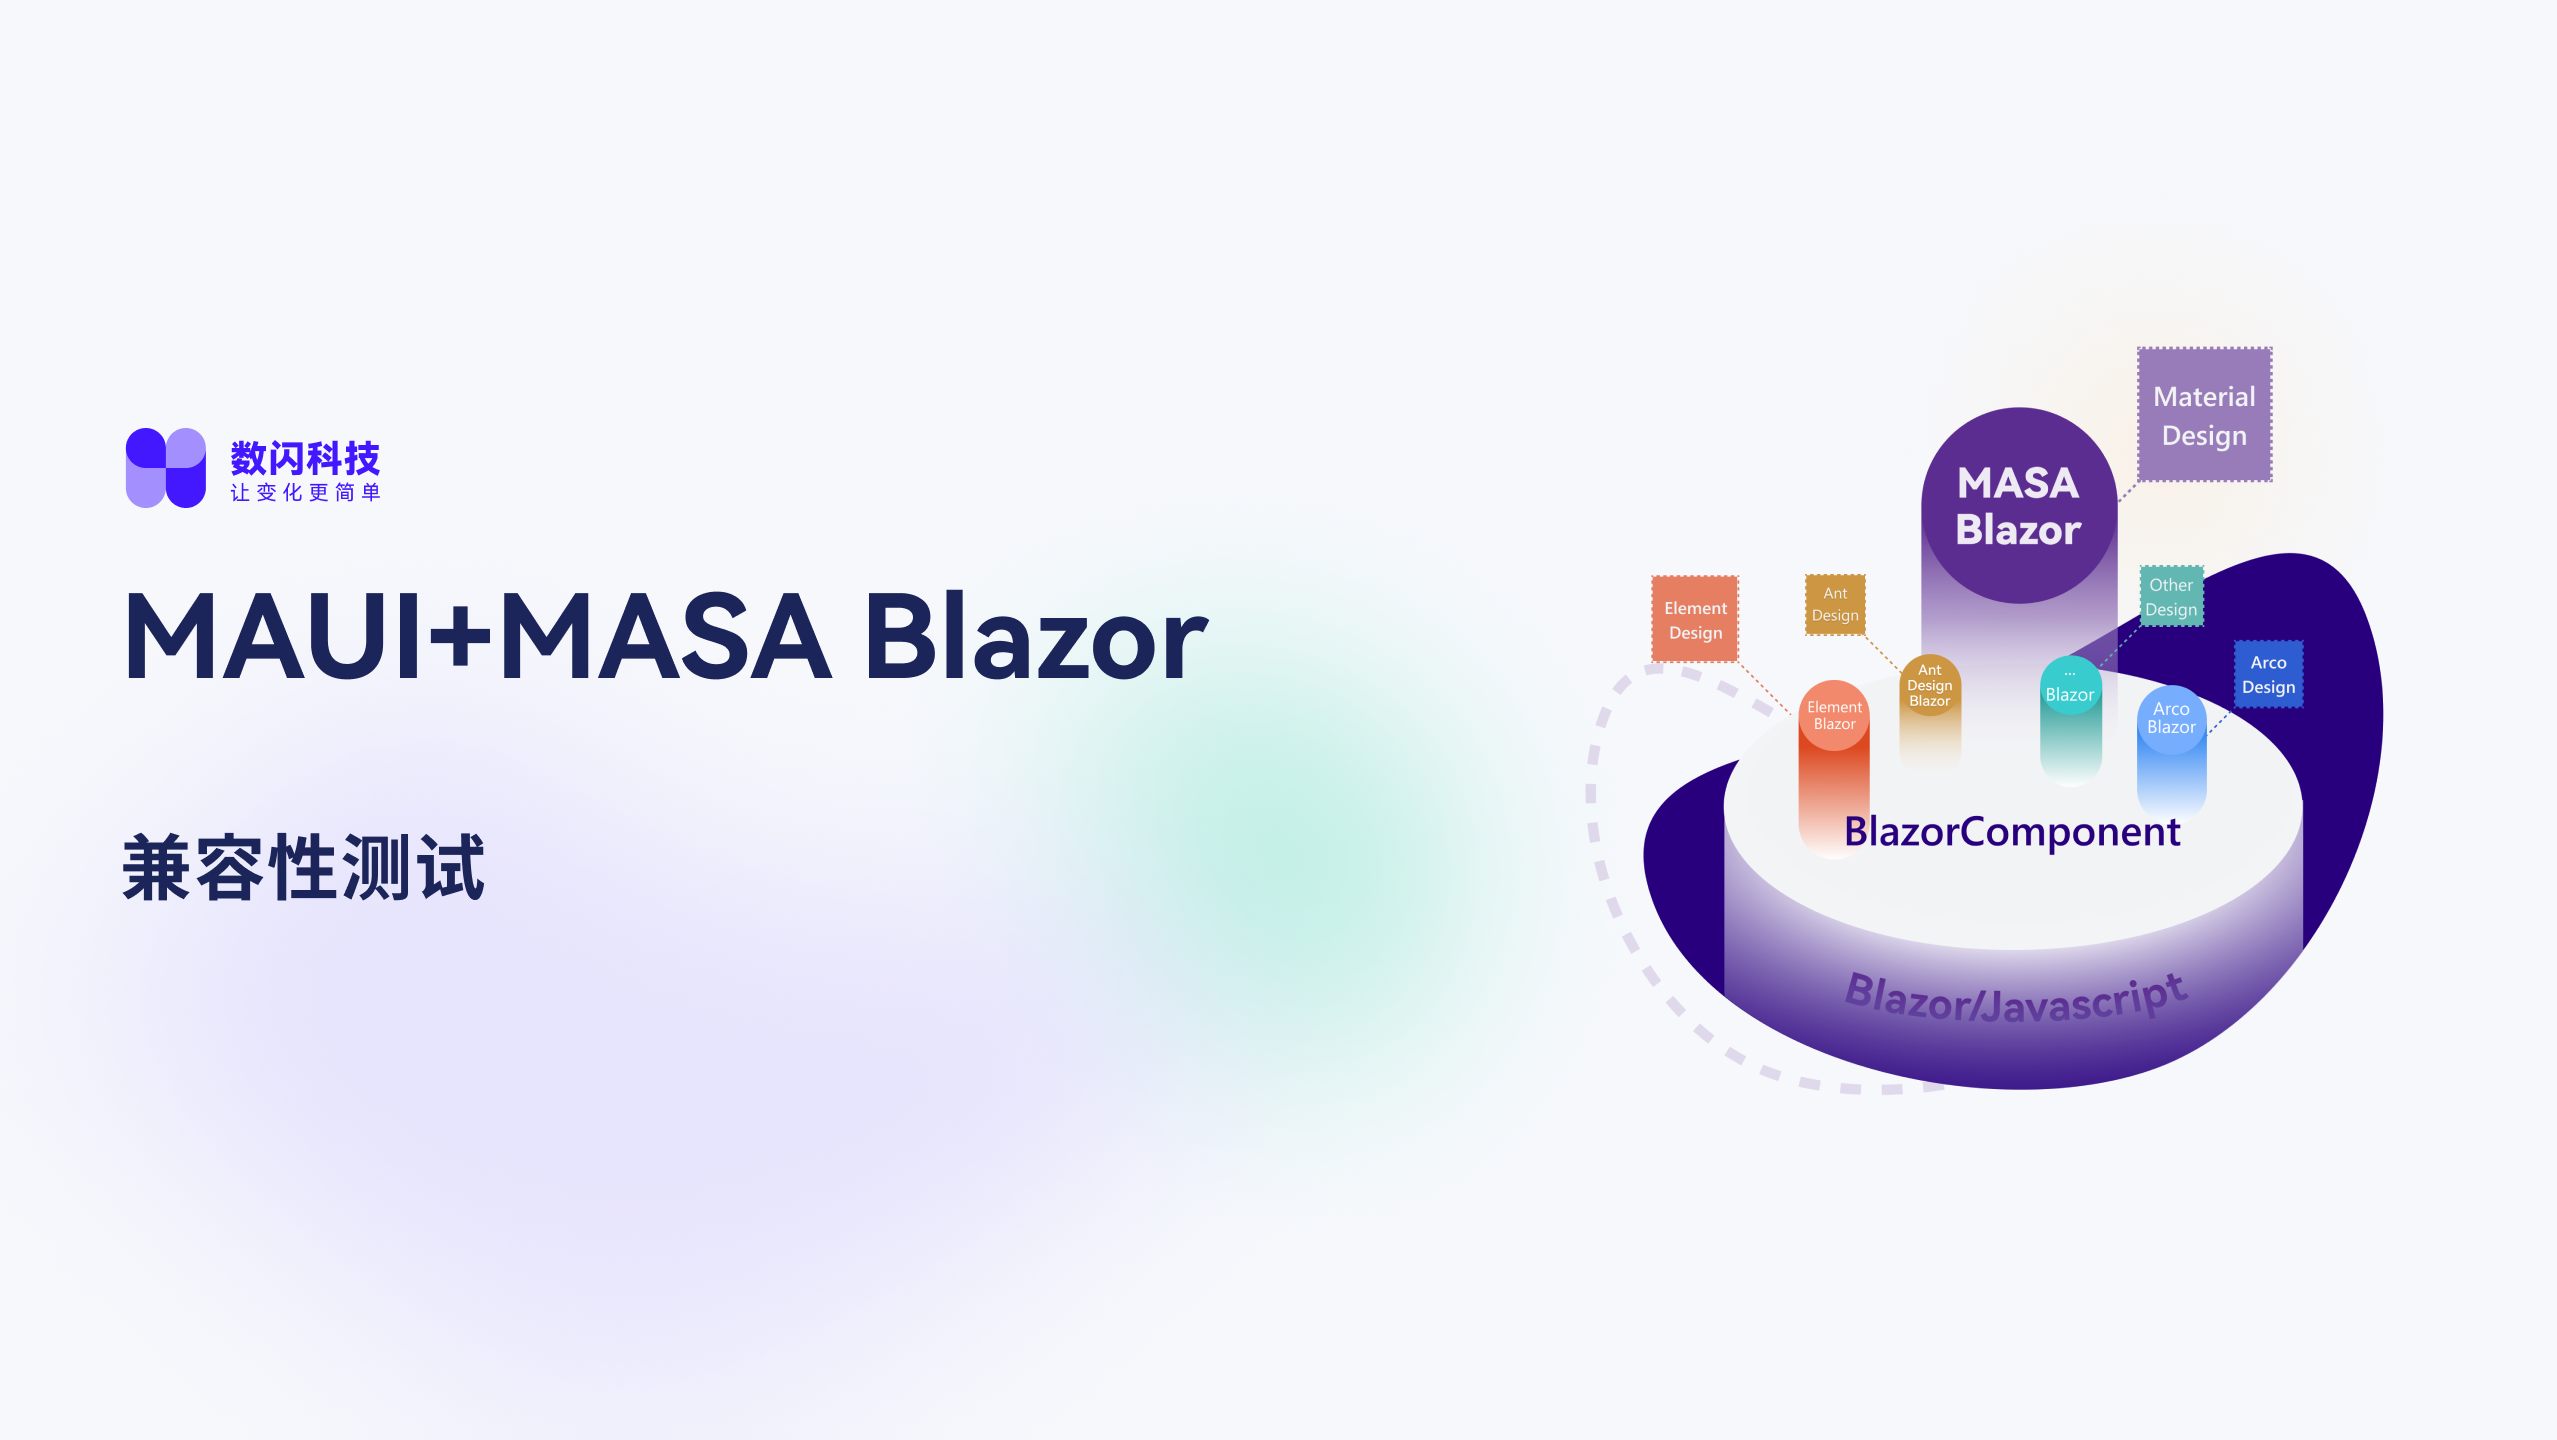 MAUI+MASA Blazor 兼容性测试报告及分析